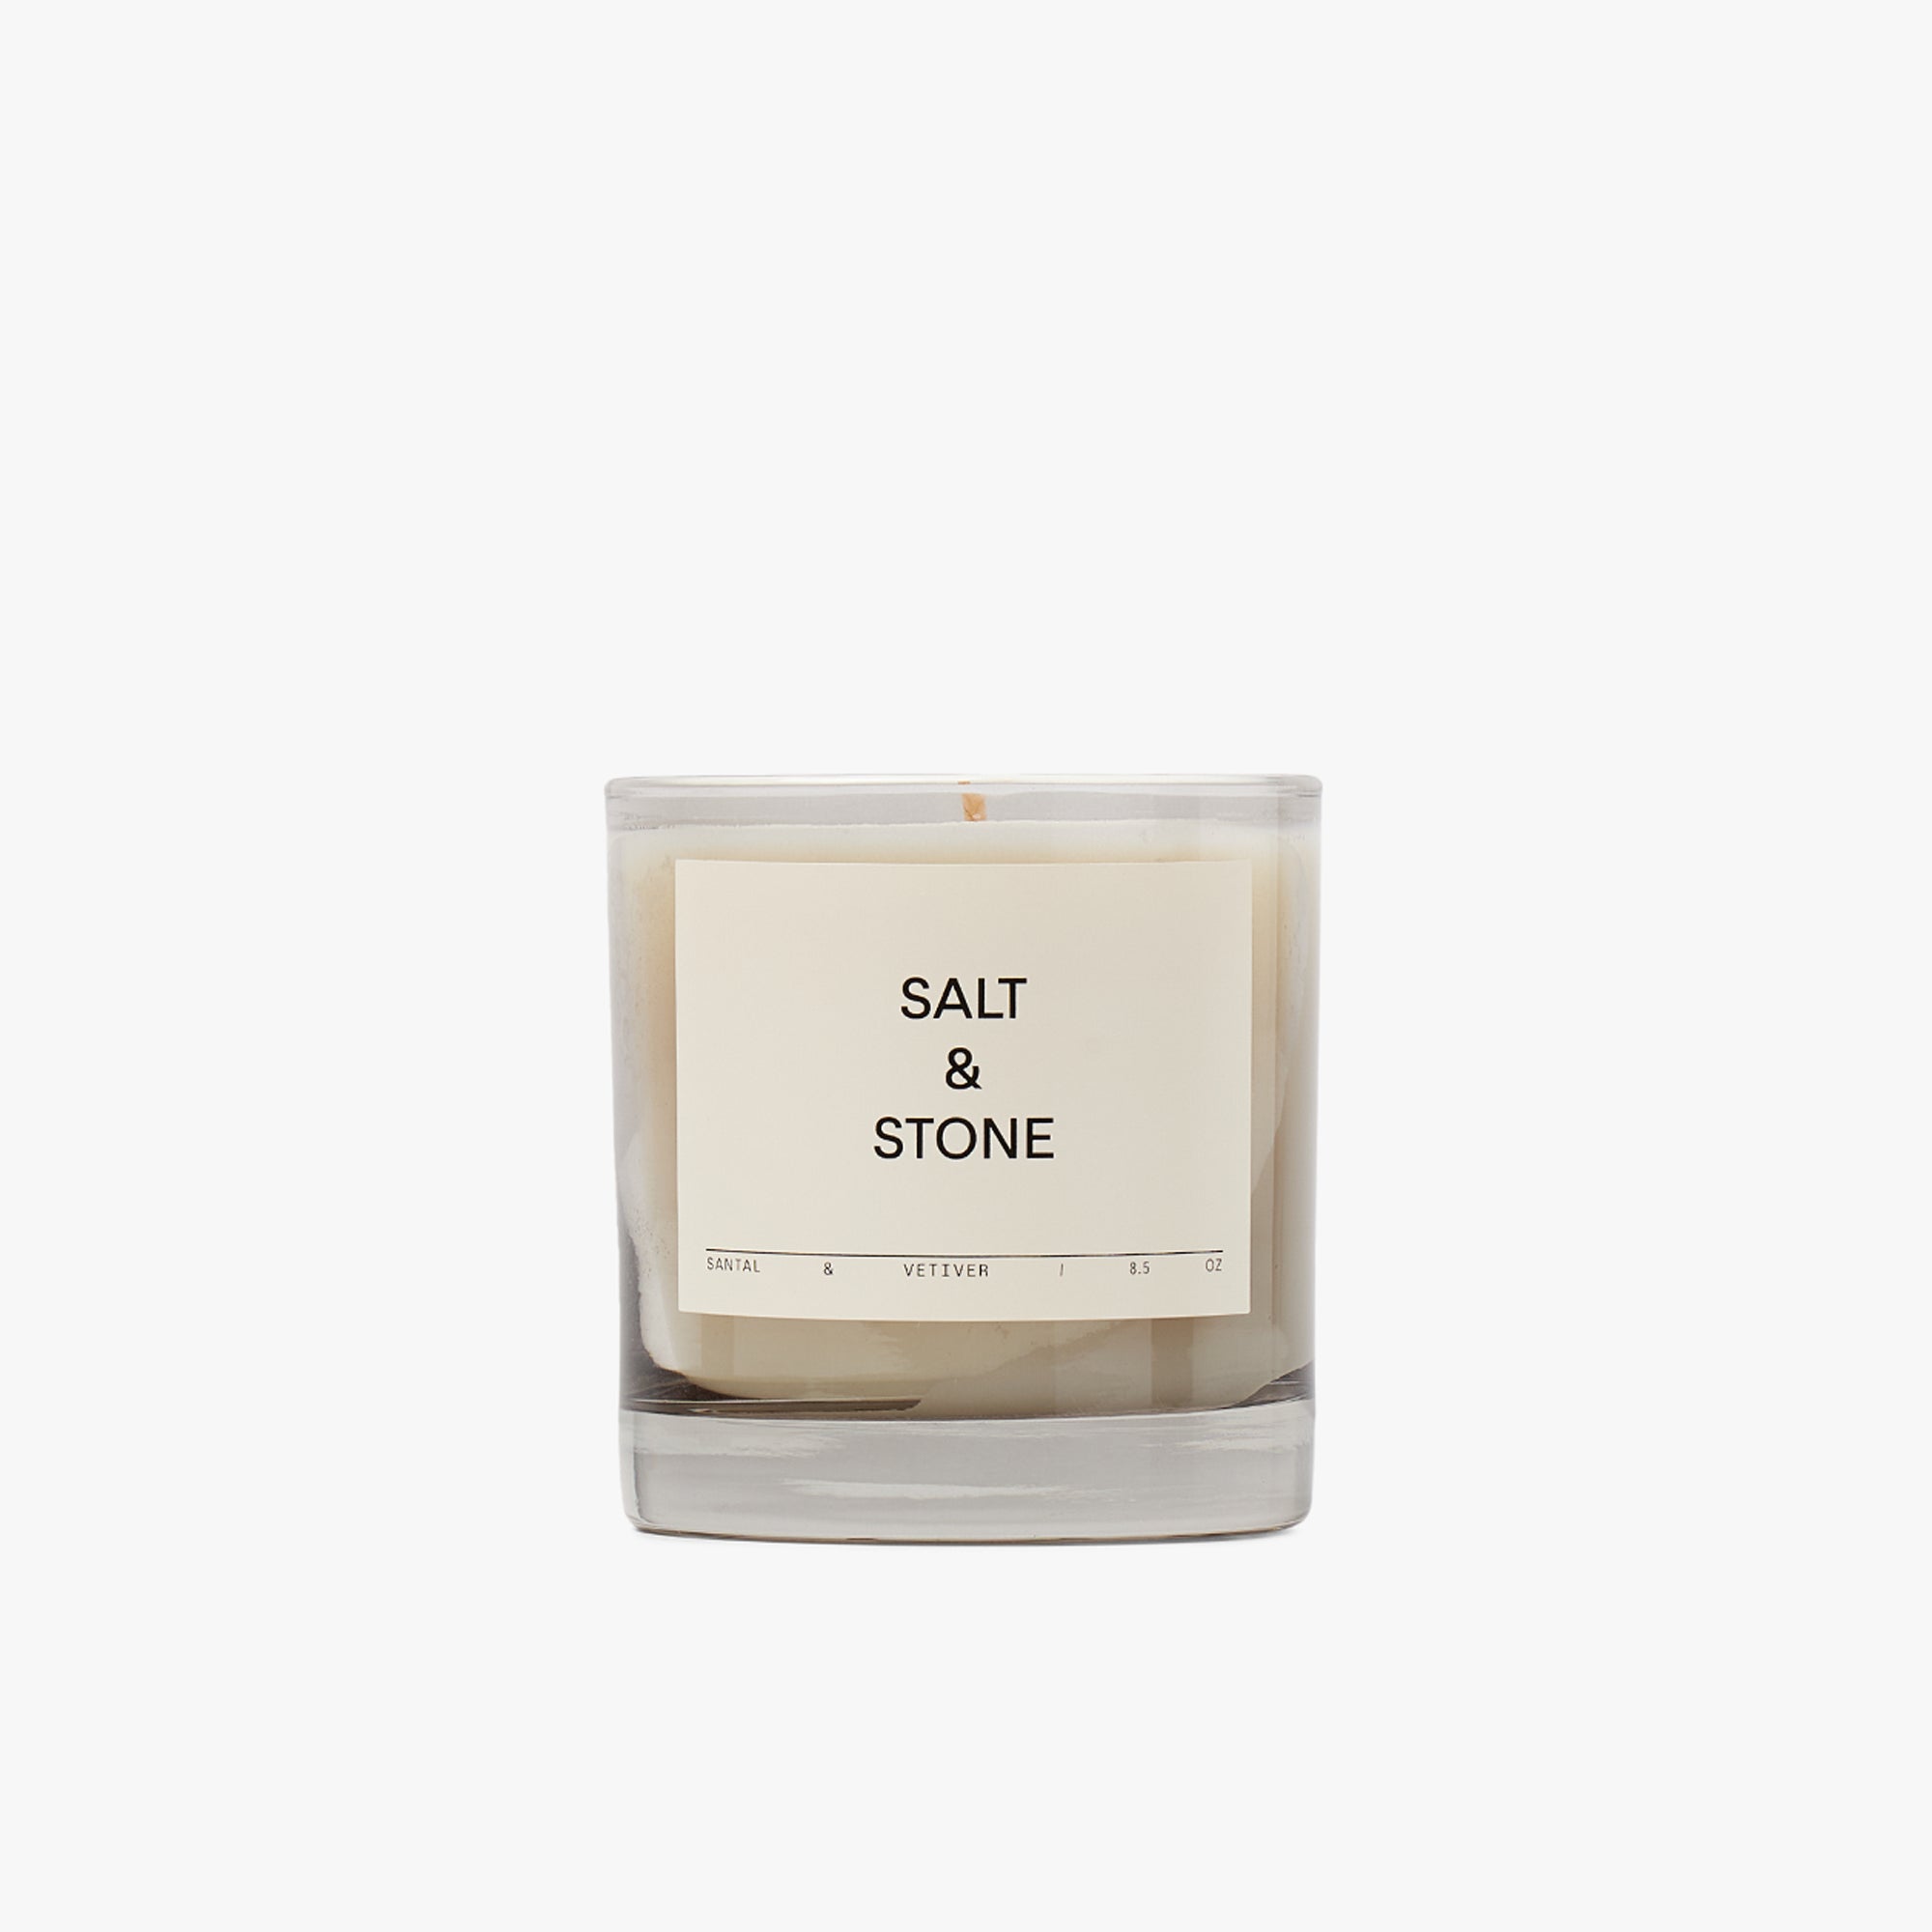 SALT & STONE Bougie / Santal & Vetiver 1